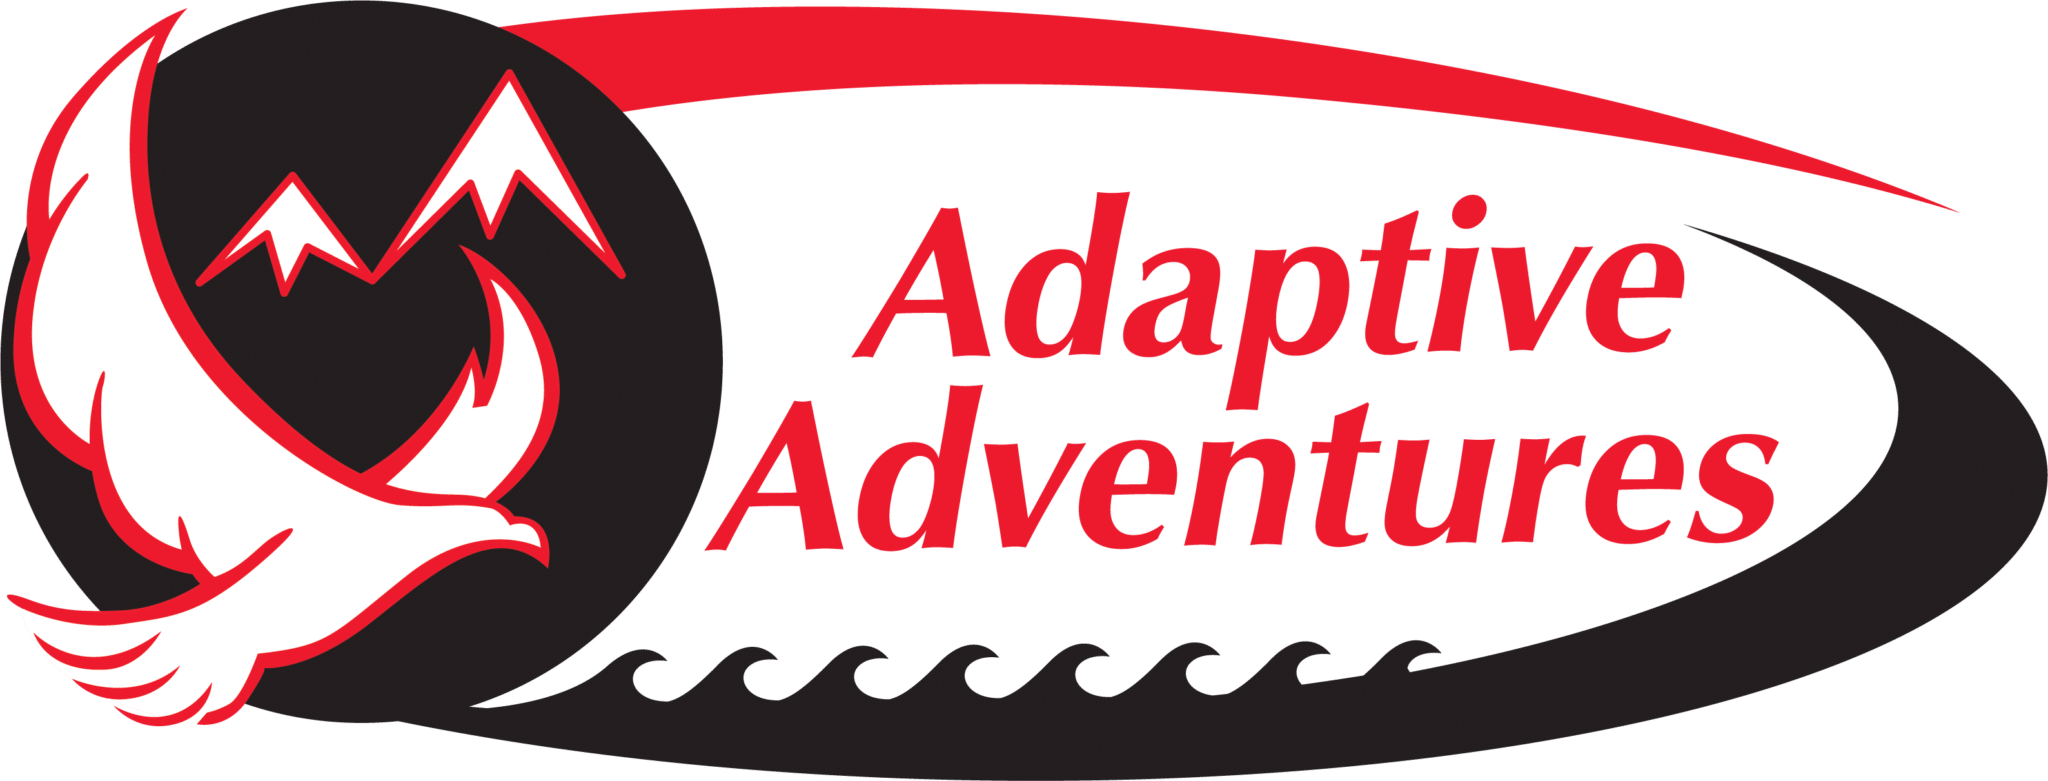 Adaptive Adventures Logo